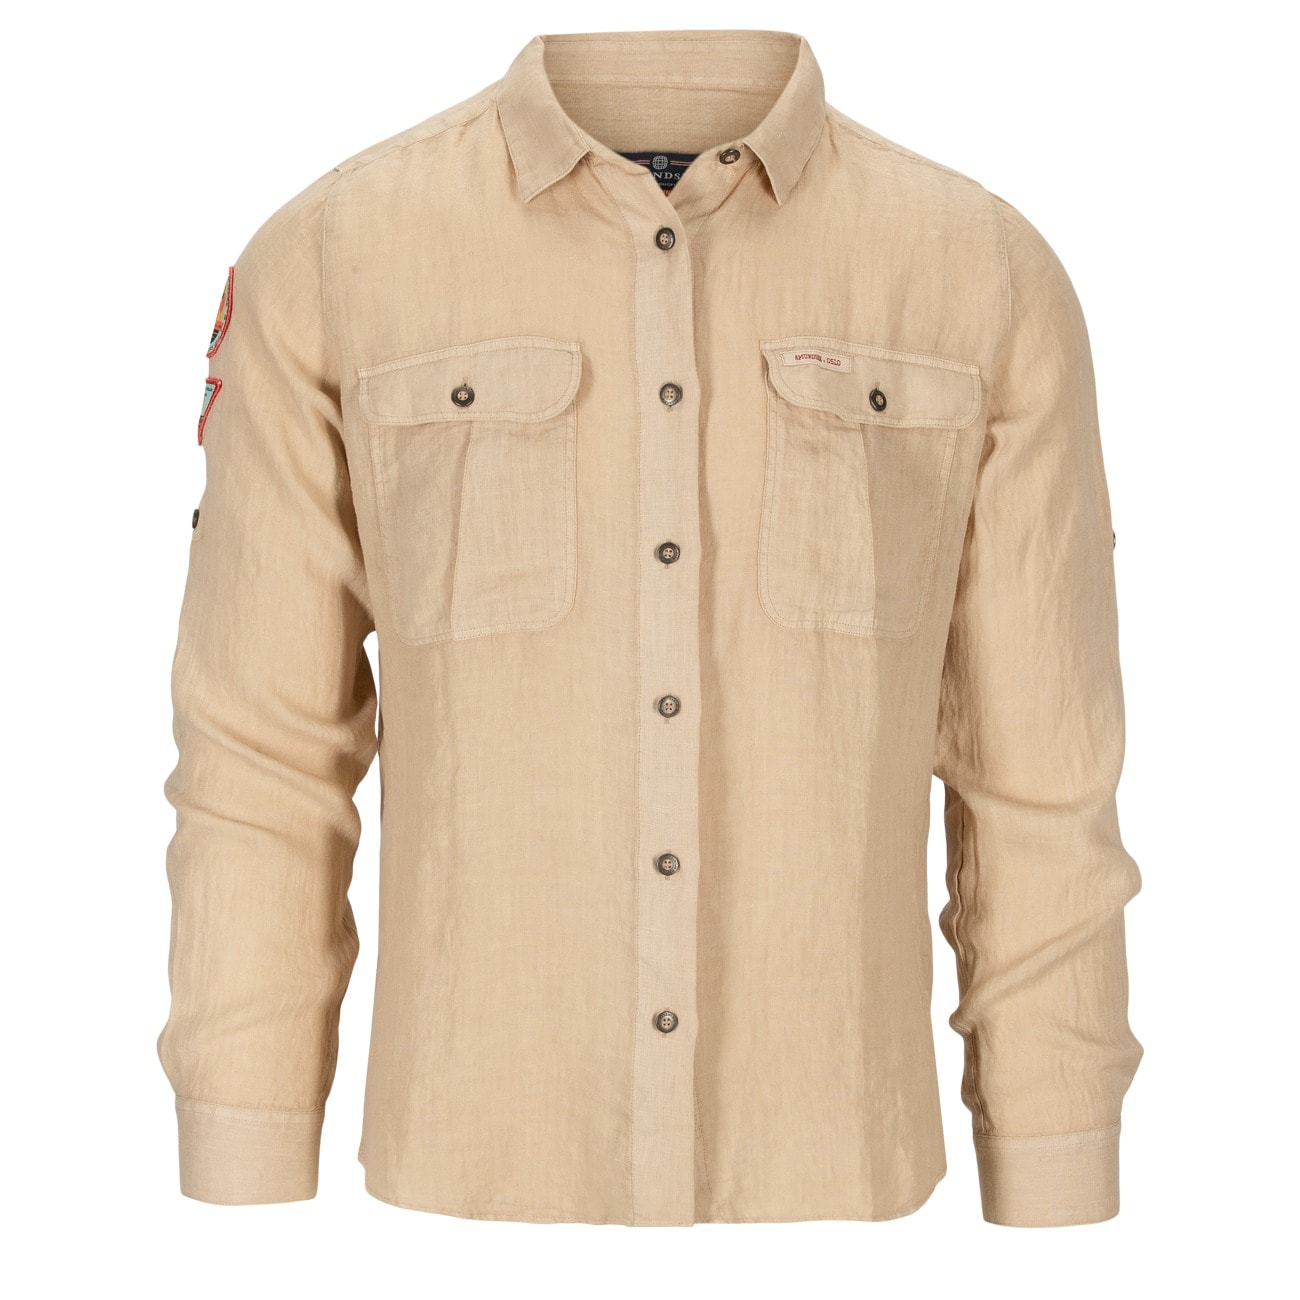 Amundsen Sports Safari Linen Shirt G. Dyed M's